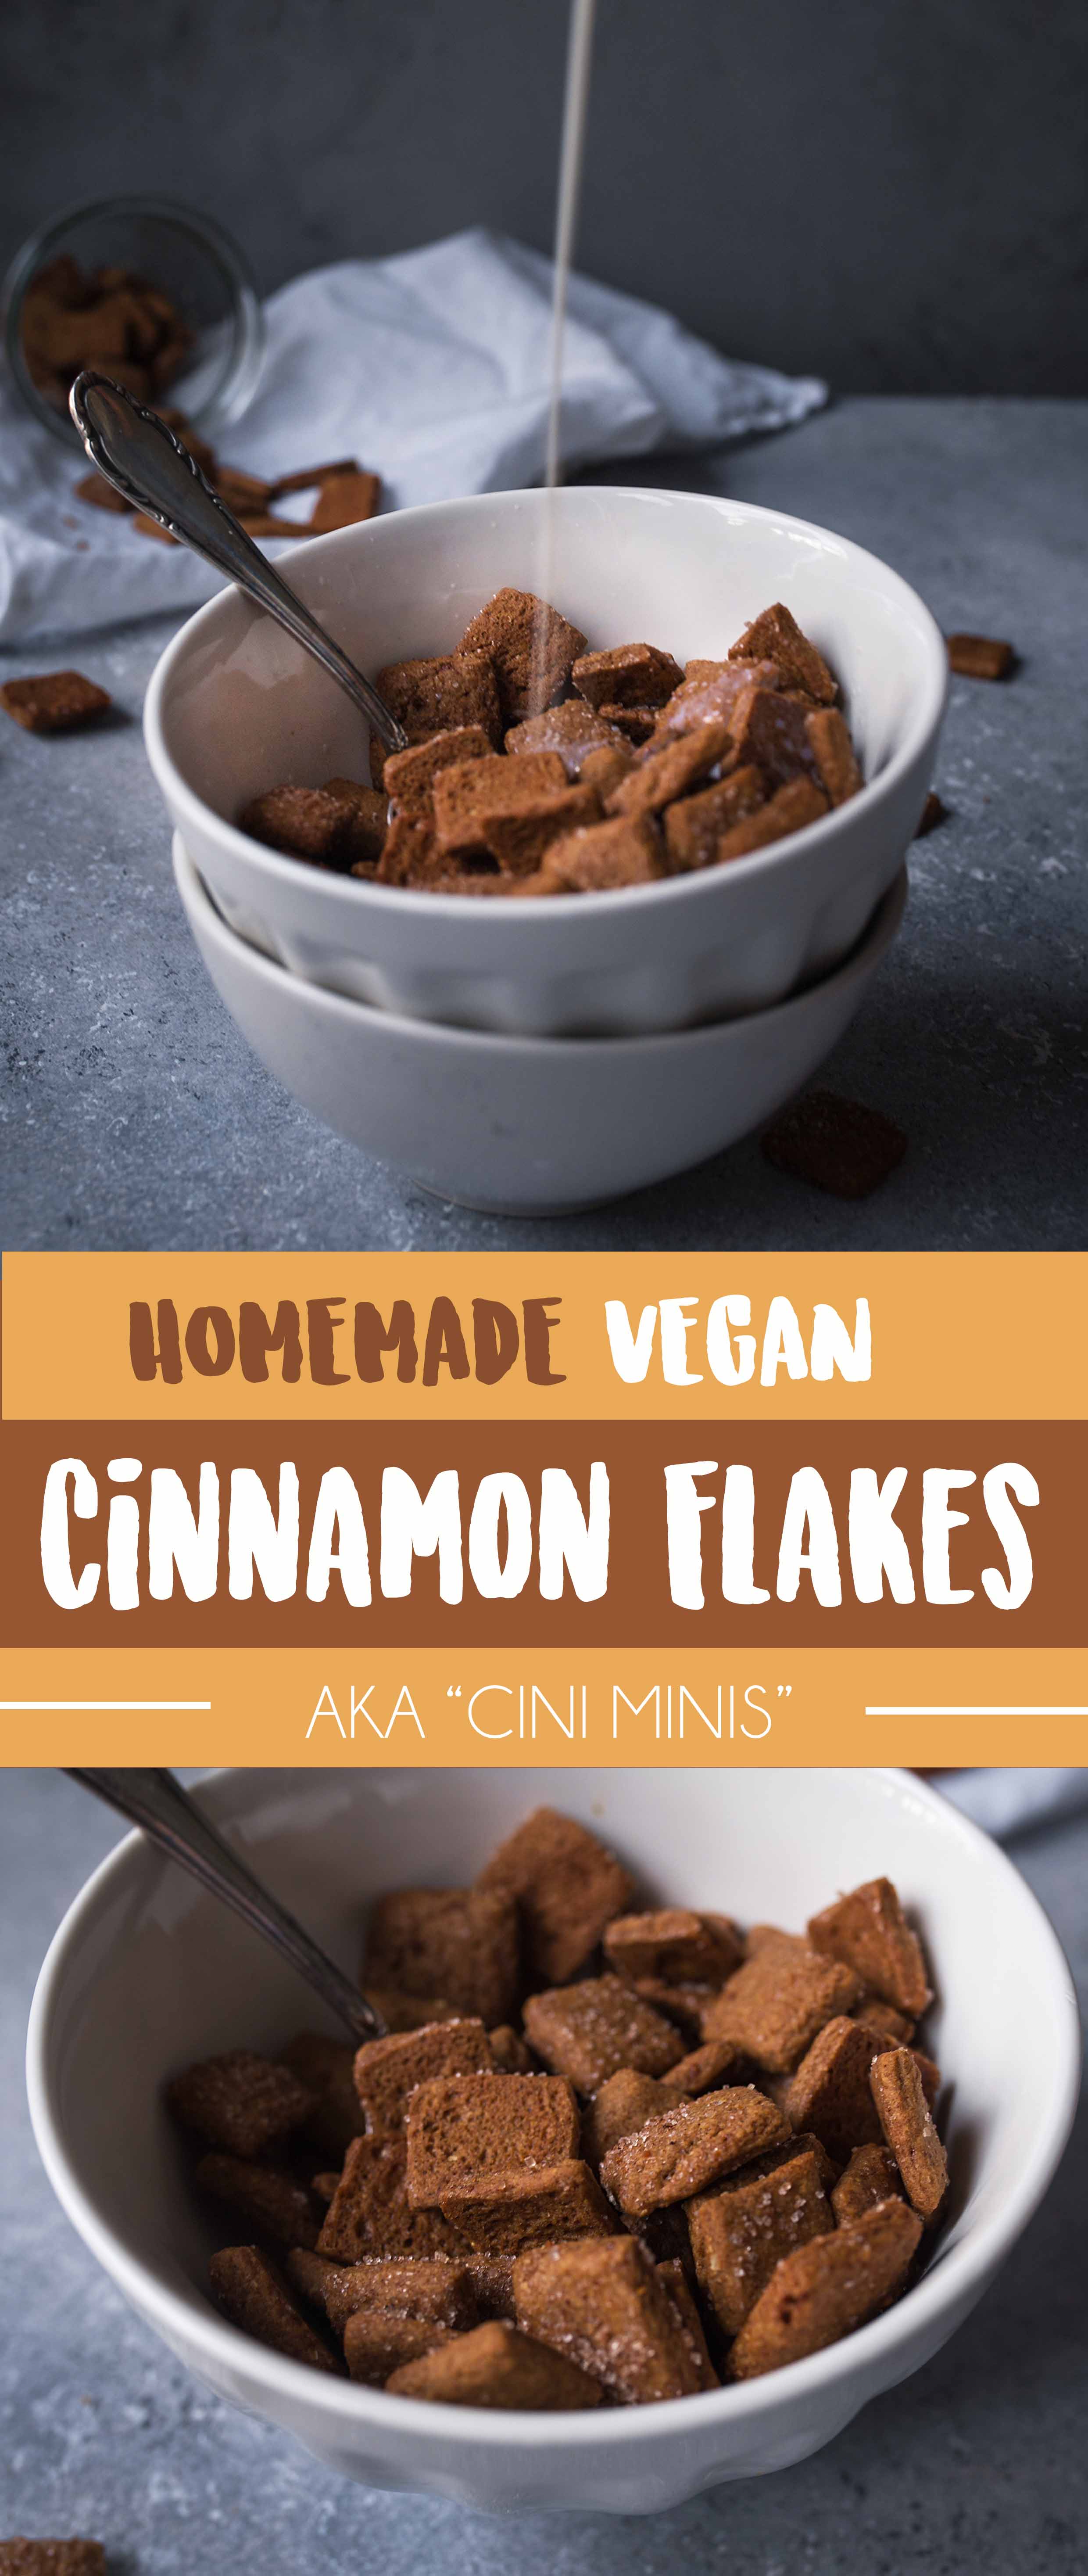 Homemade Vegan Cinnamon Crunch Flakes aka "Cini minis"